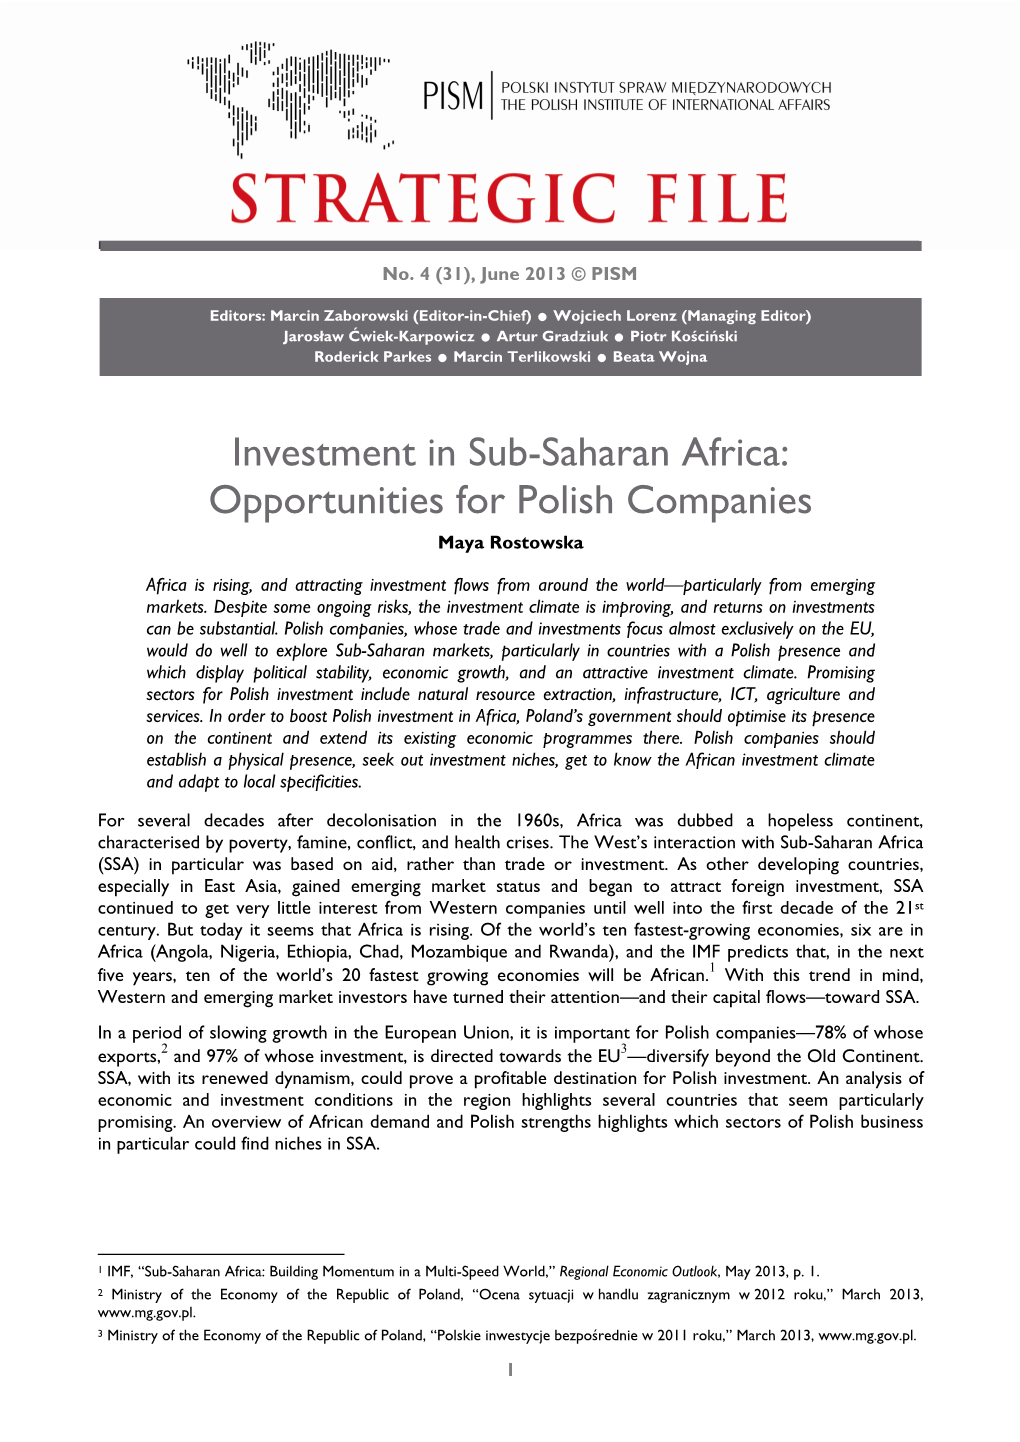 Investment in Sub-Saharan Africa: Opportunities for Polish Companies Maya Rostowska